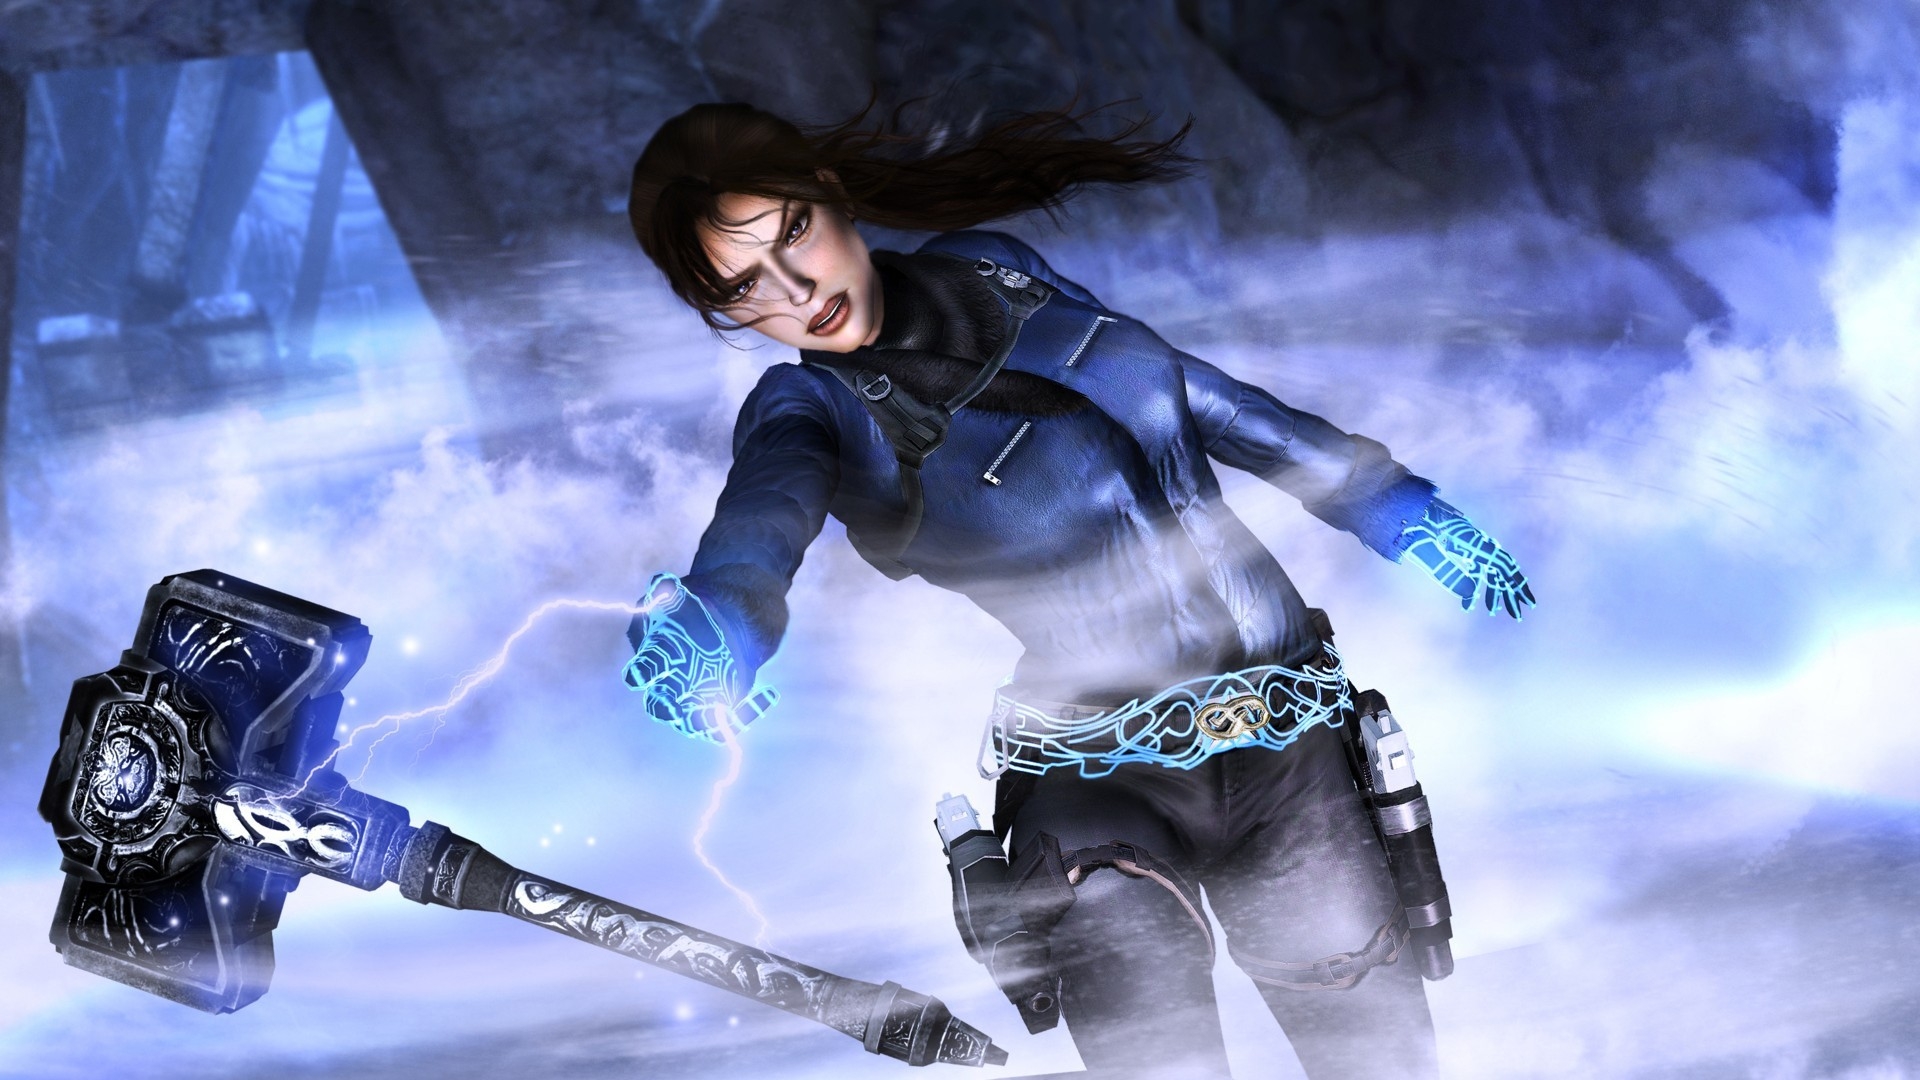 Tomb Raider Lara Croft for 1920 x 1080 HDTV 1080p resolution